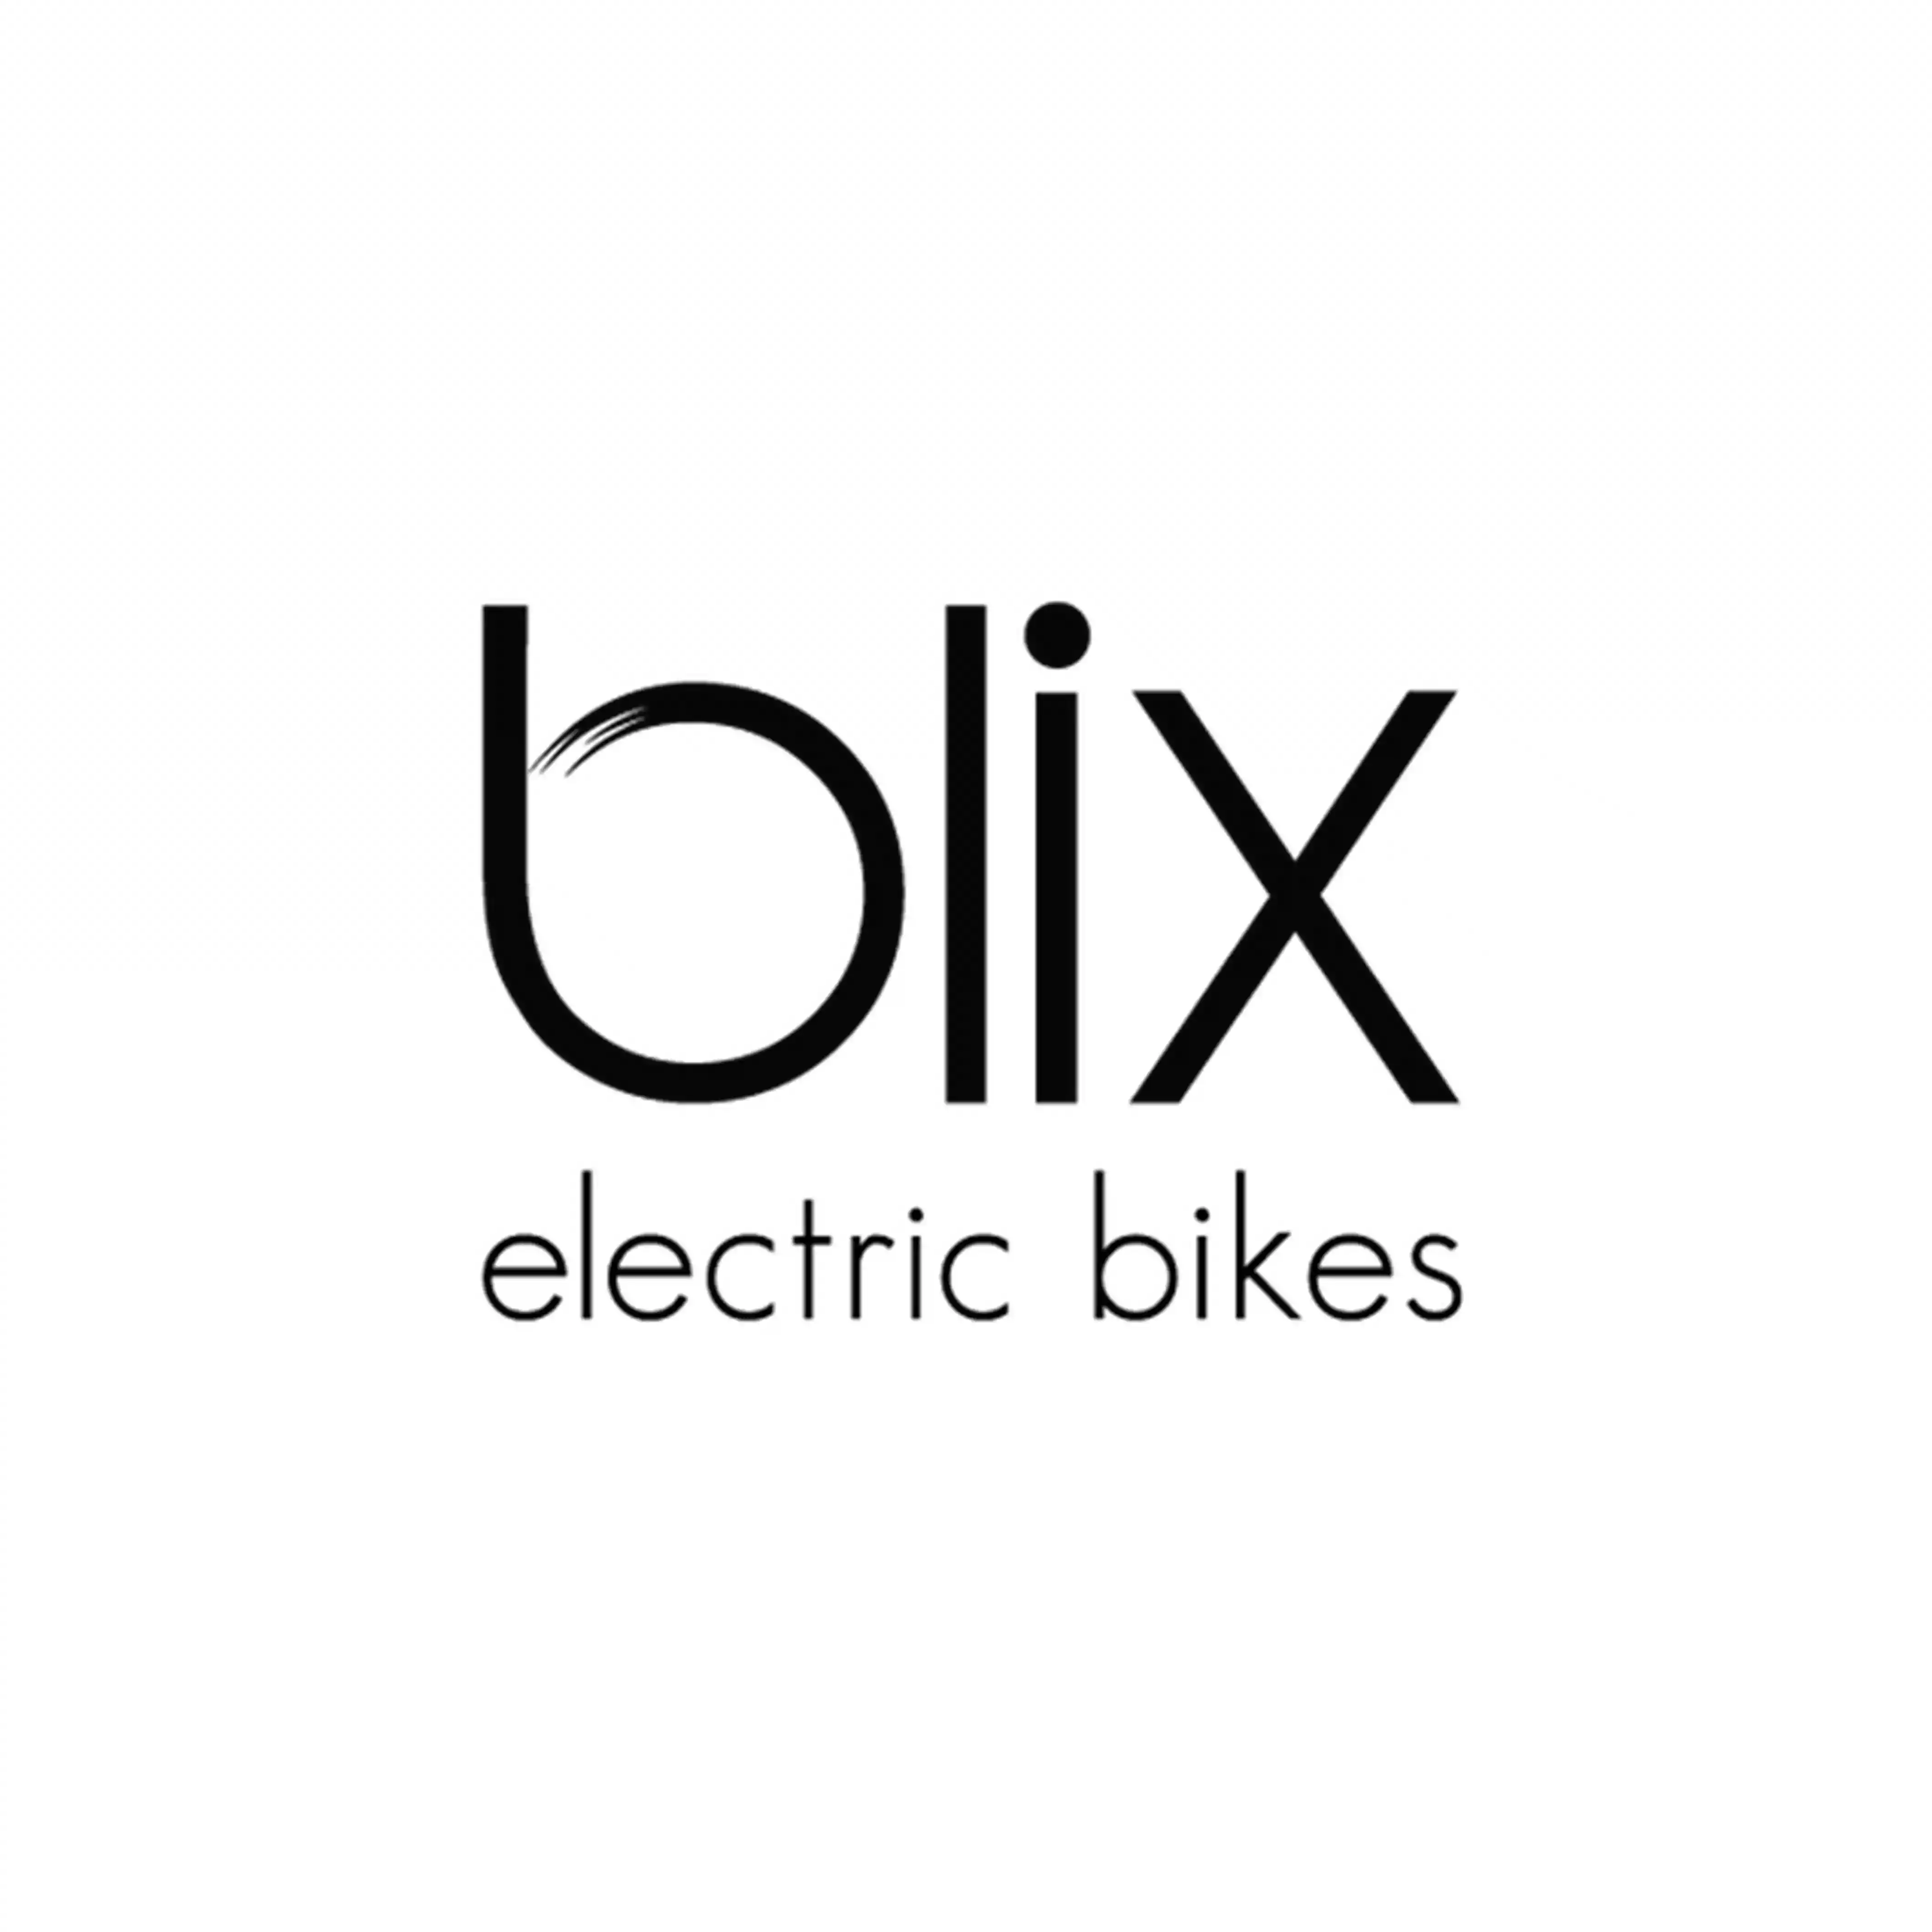 Blix Bike